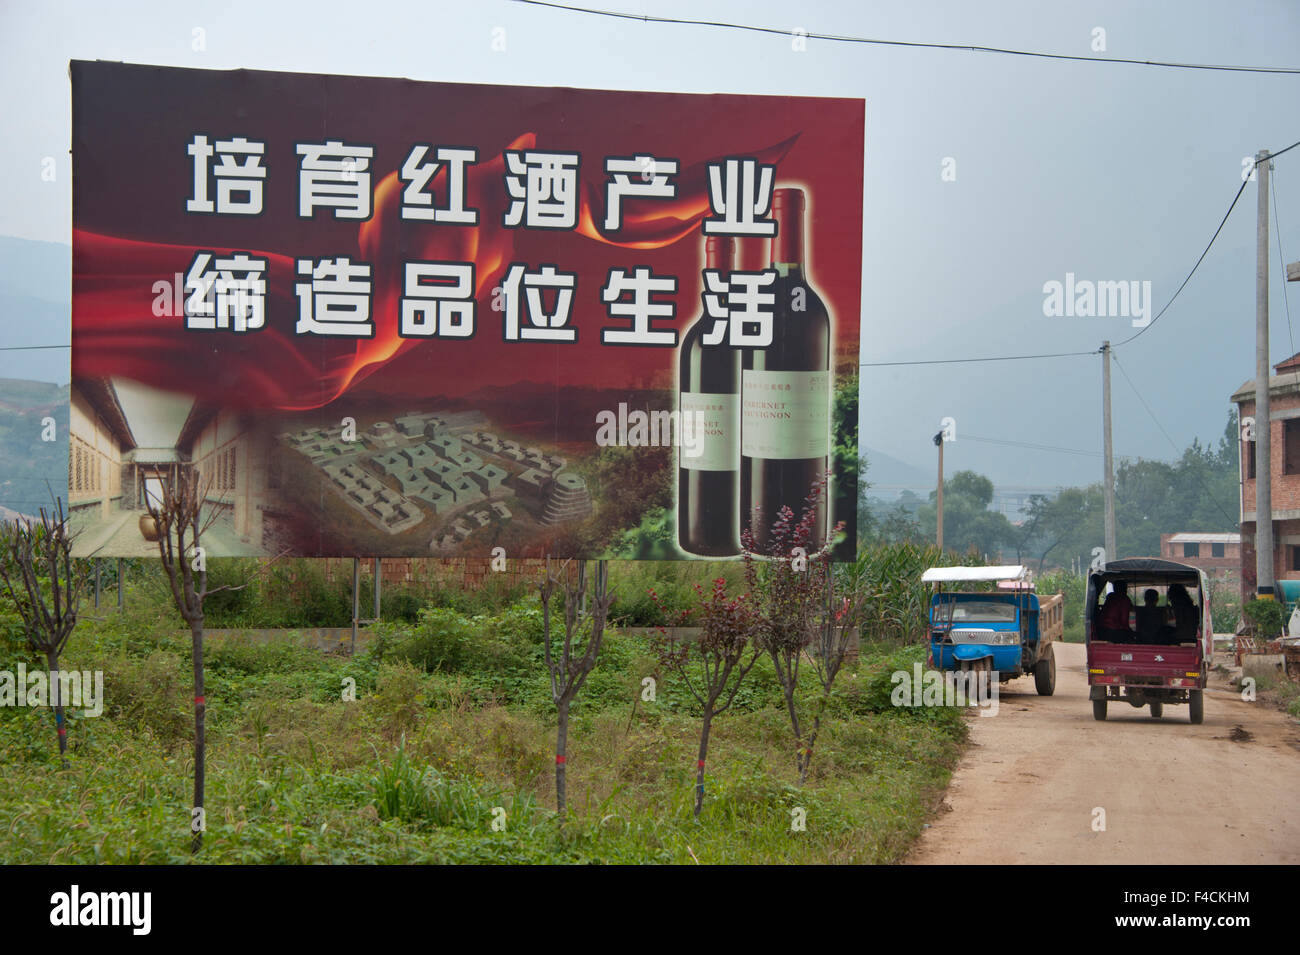 China, Shaanxi. Billboard advertising Jade Valley Winery and Resort. Stock Photo